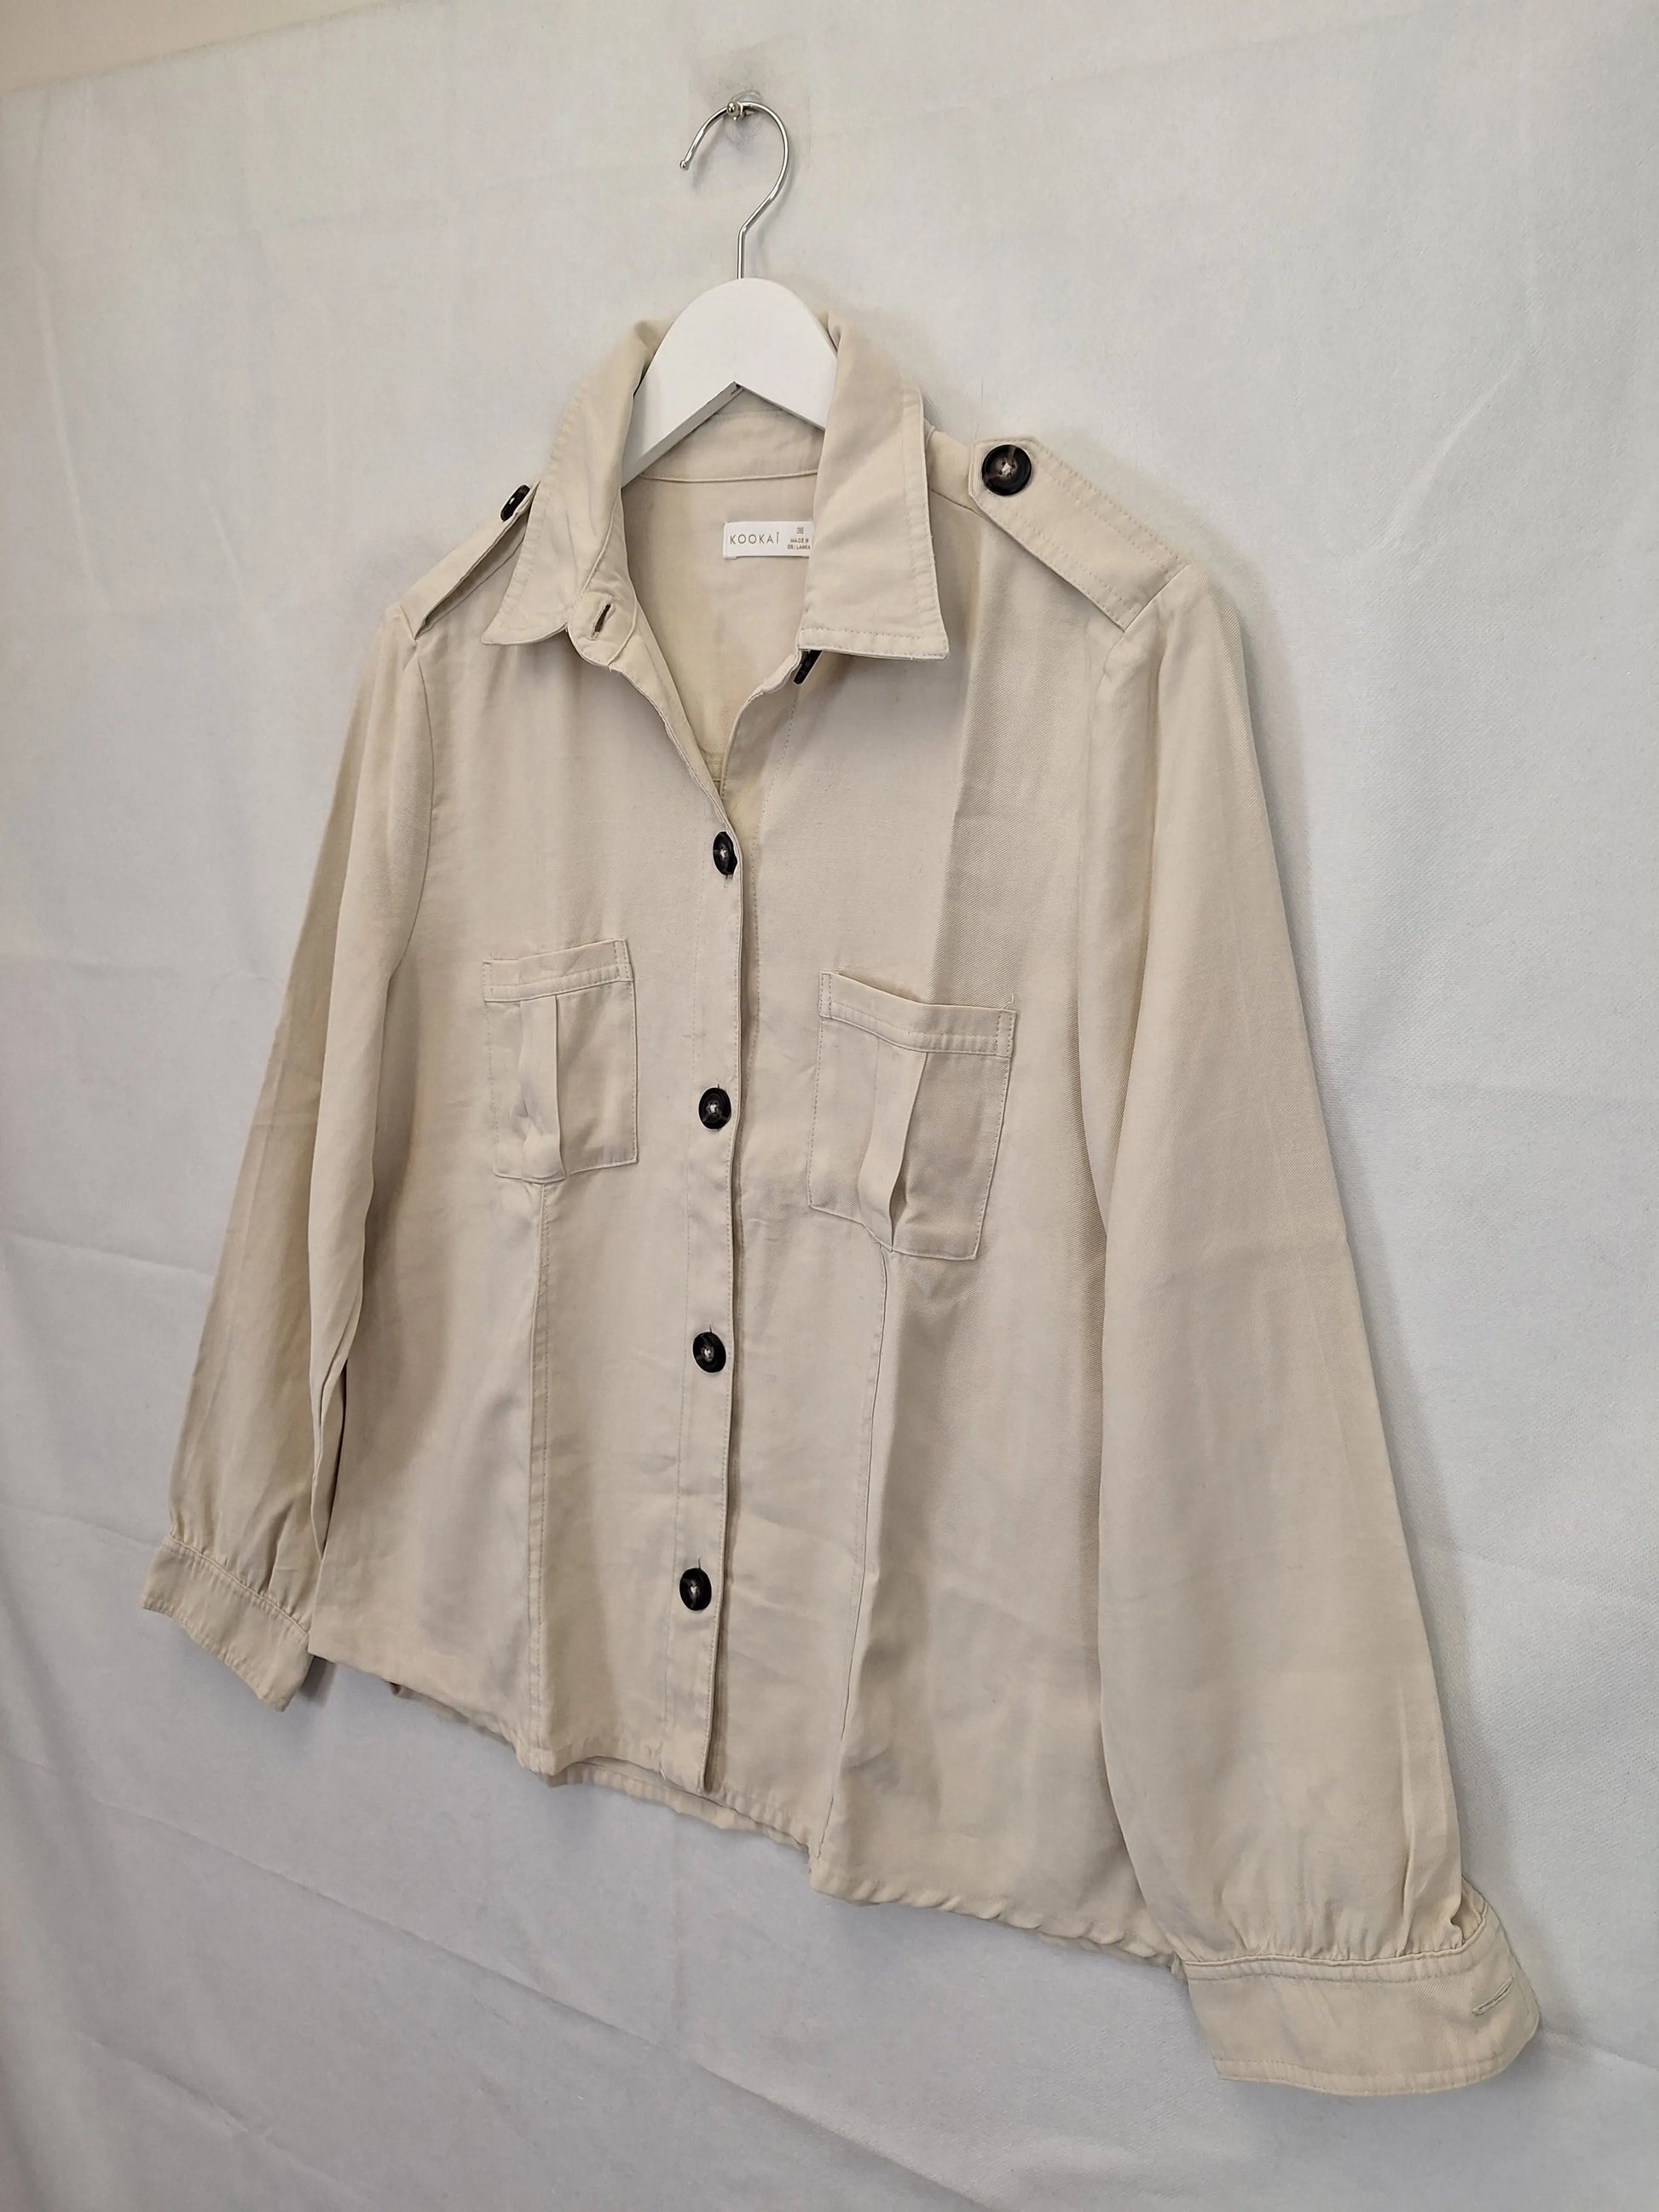 Kookai Safari Jacket Size 10 by SwapUp-Online Second Hand Store-Online Thrift Store